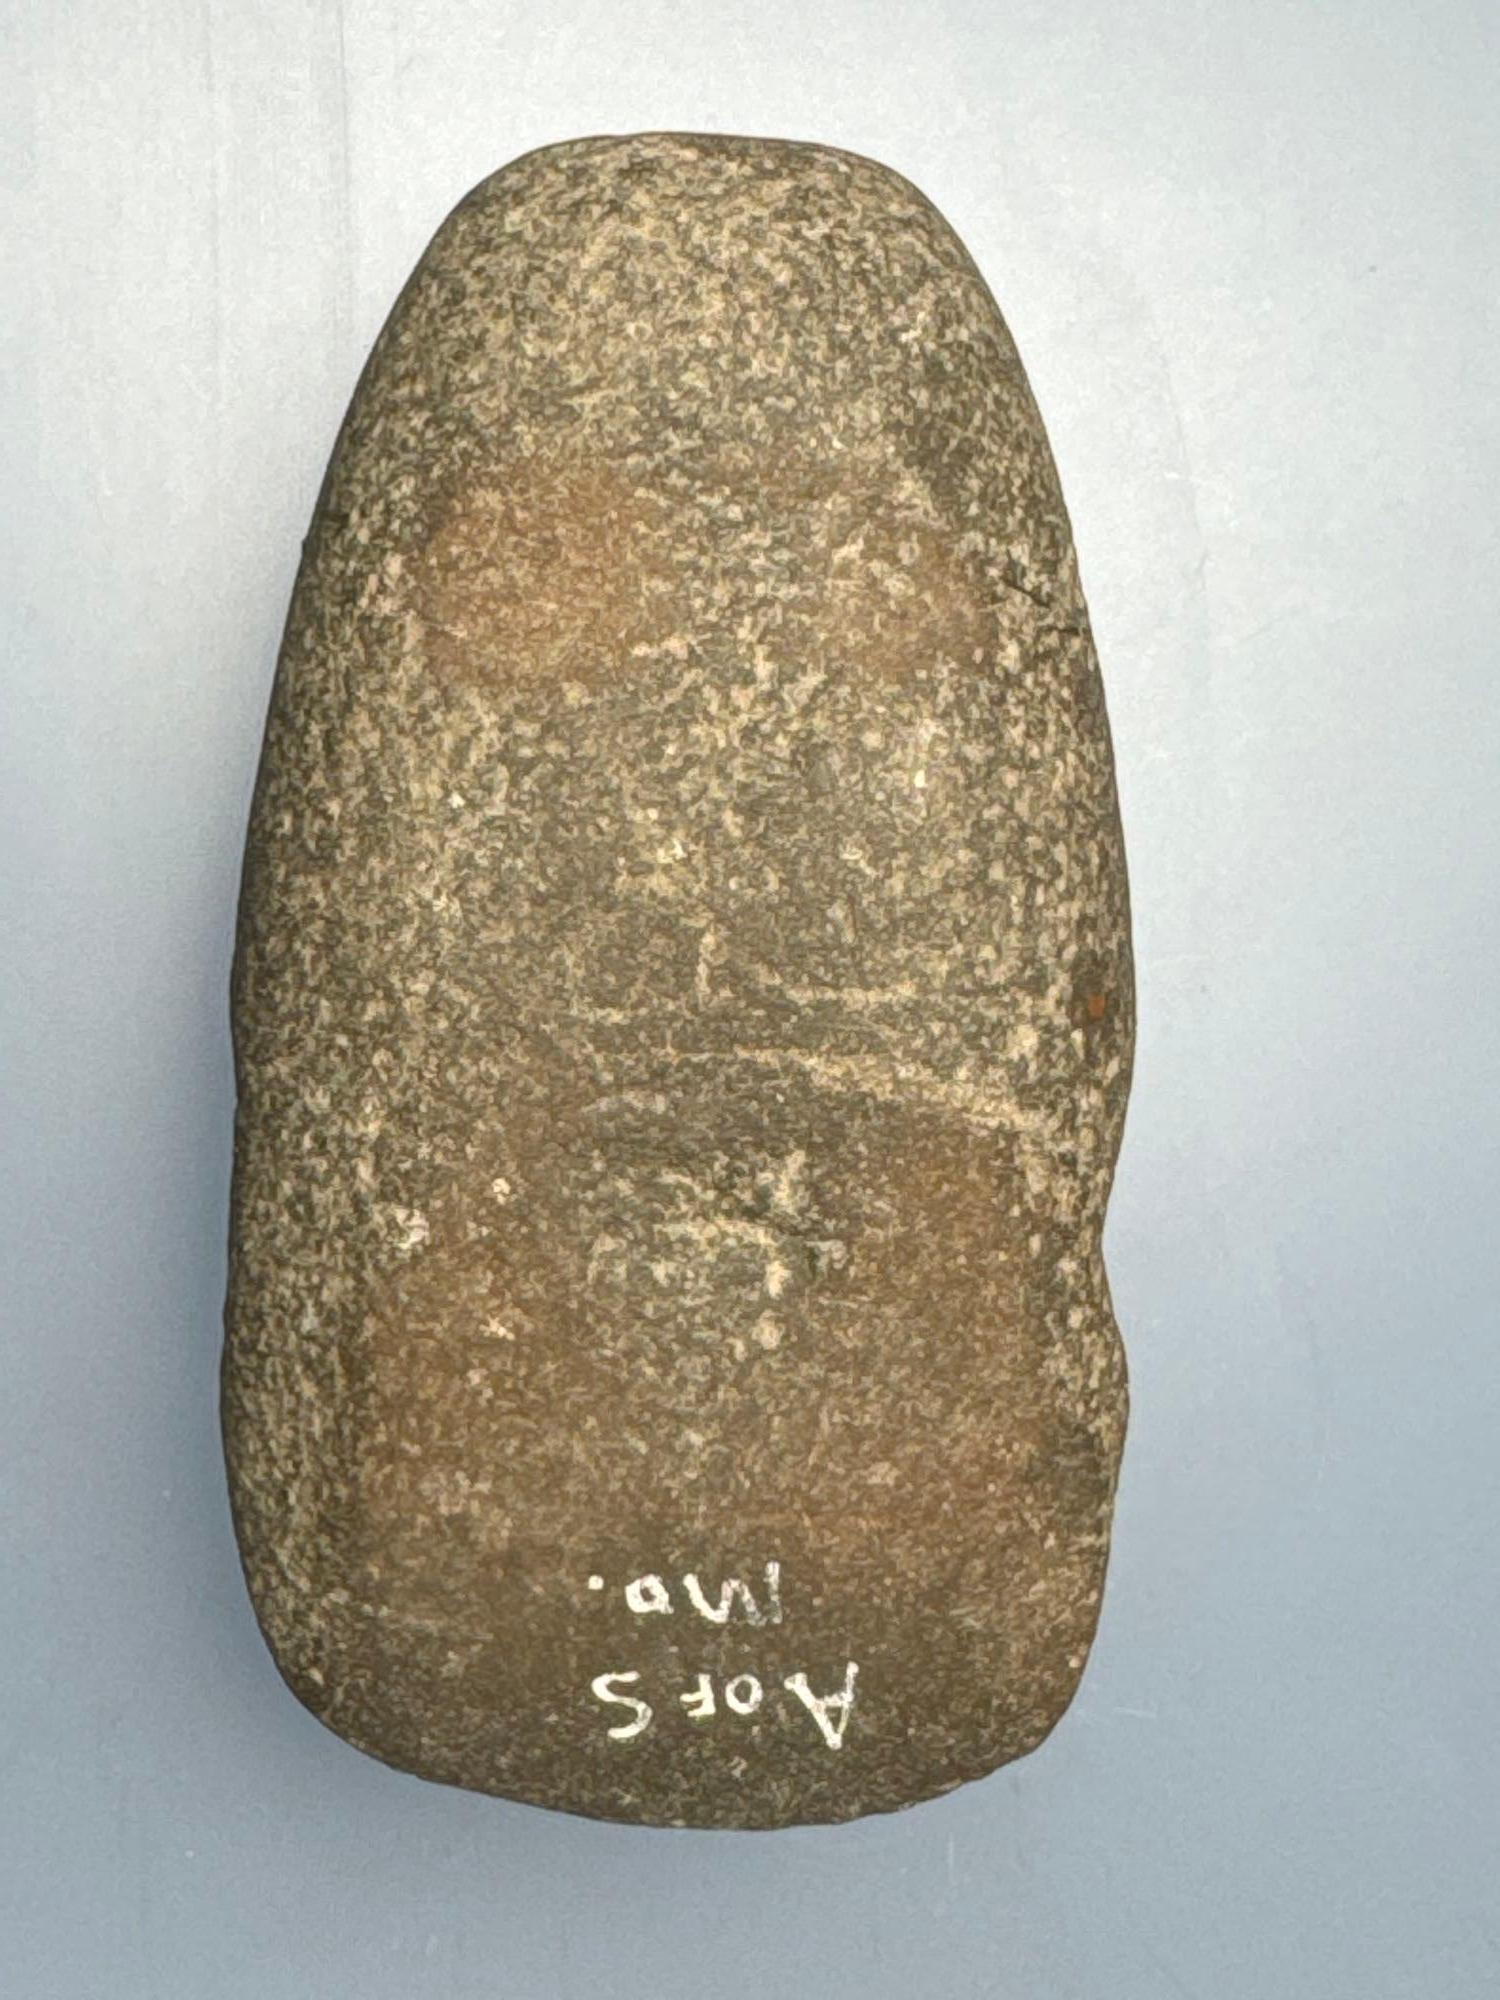 4 3/4" Celt, Polished Bt, Found in Maryland, Ex: Frank Christopher Collection